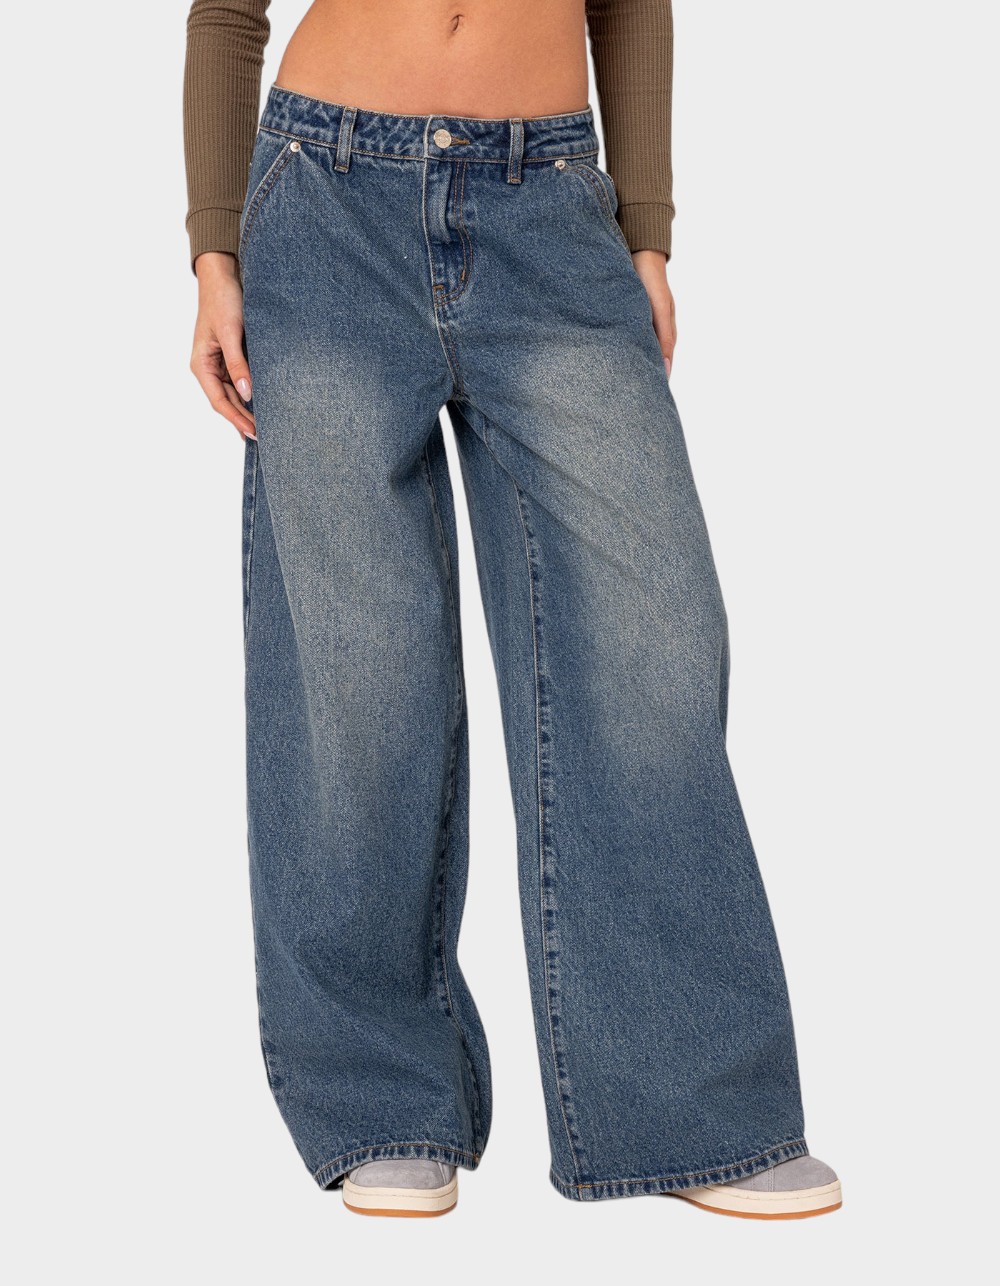 Edikted Carpenter Low Rise Jeans